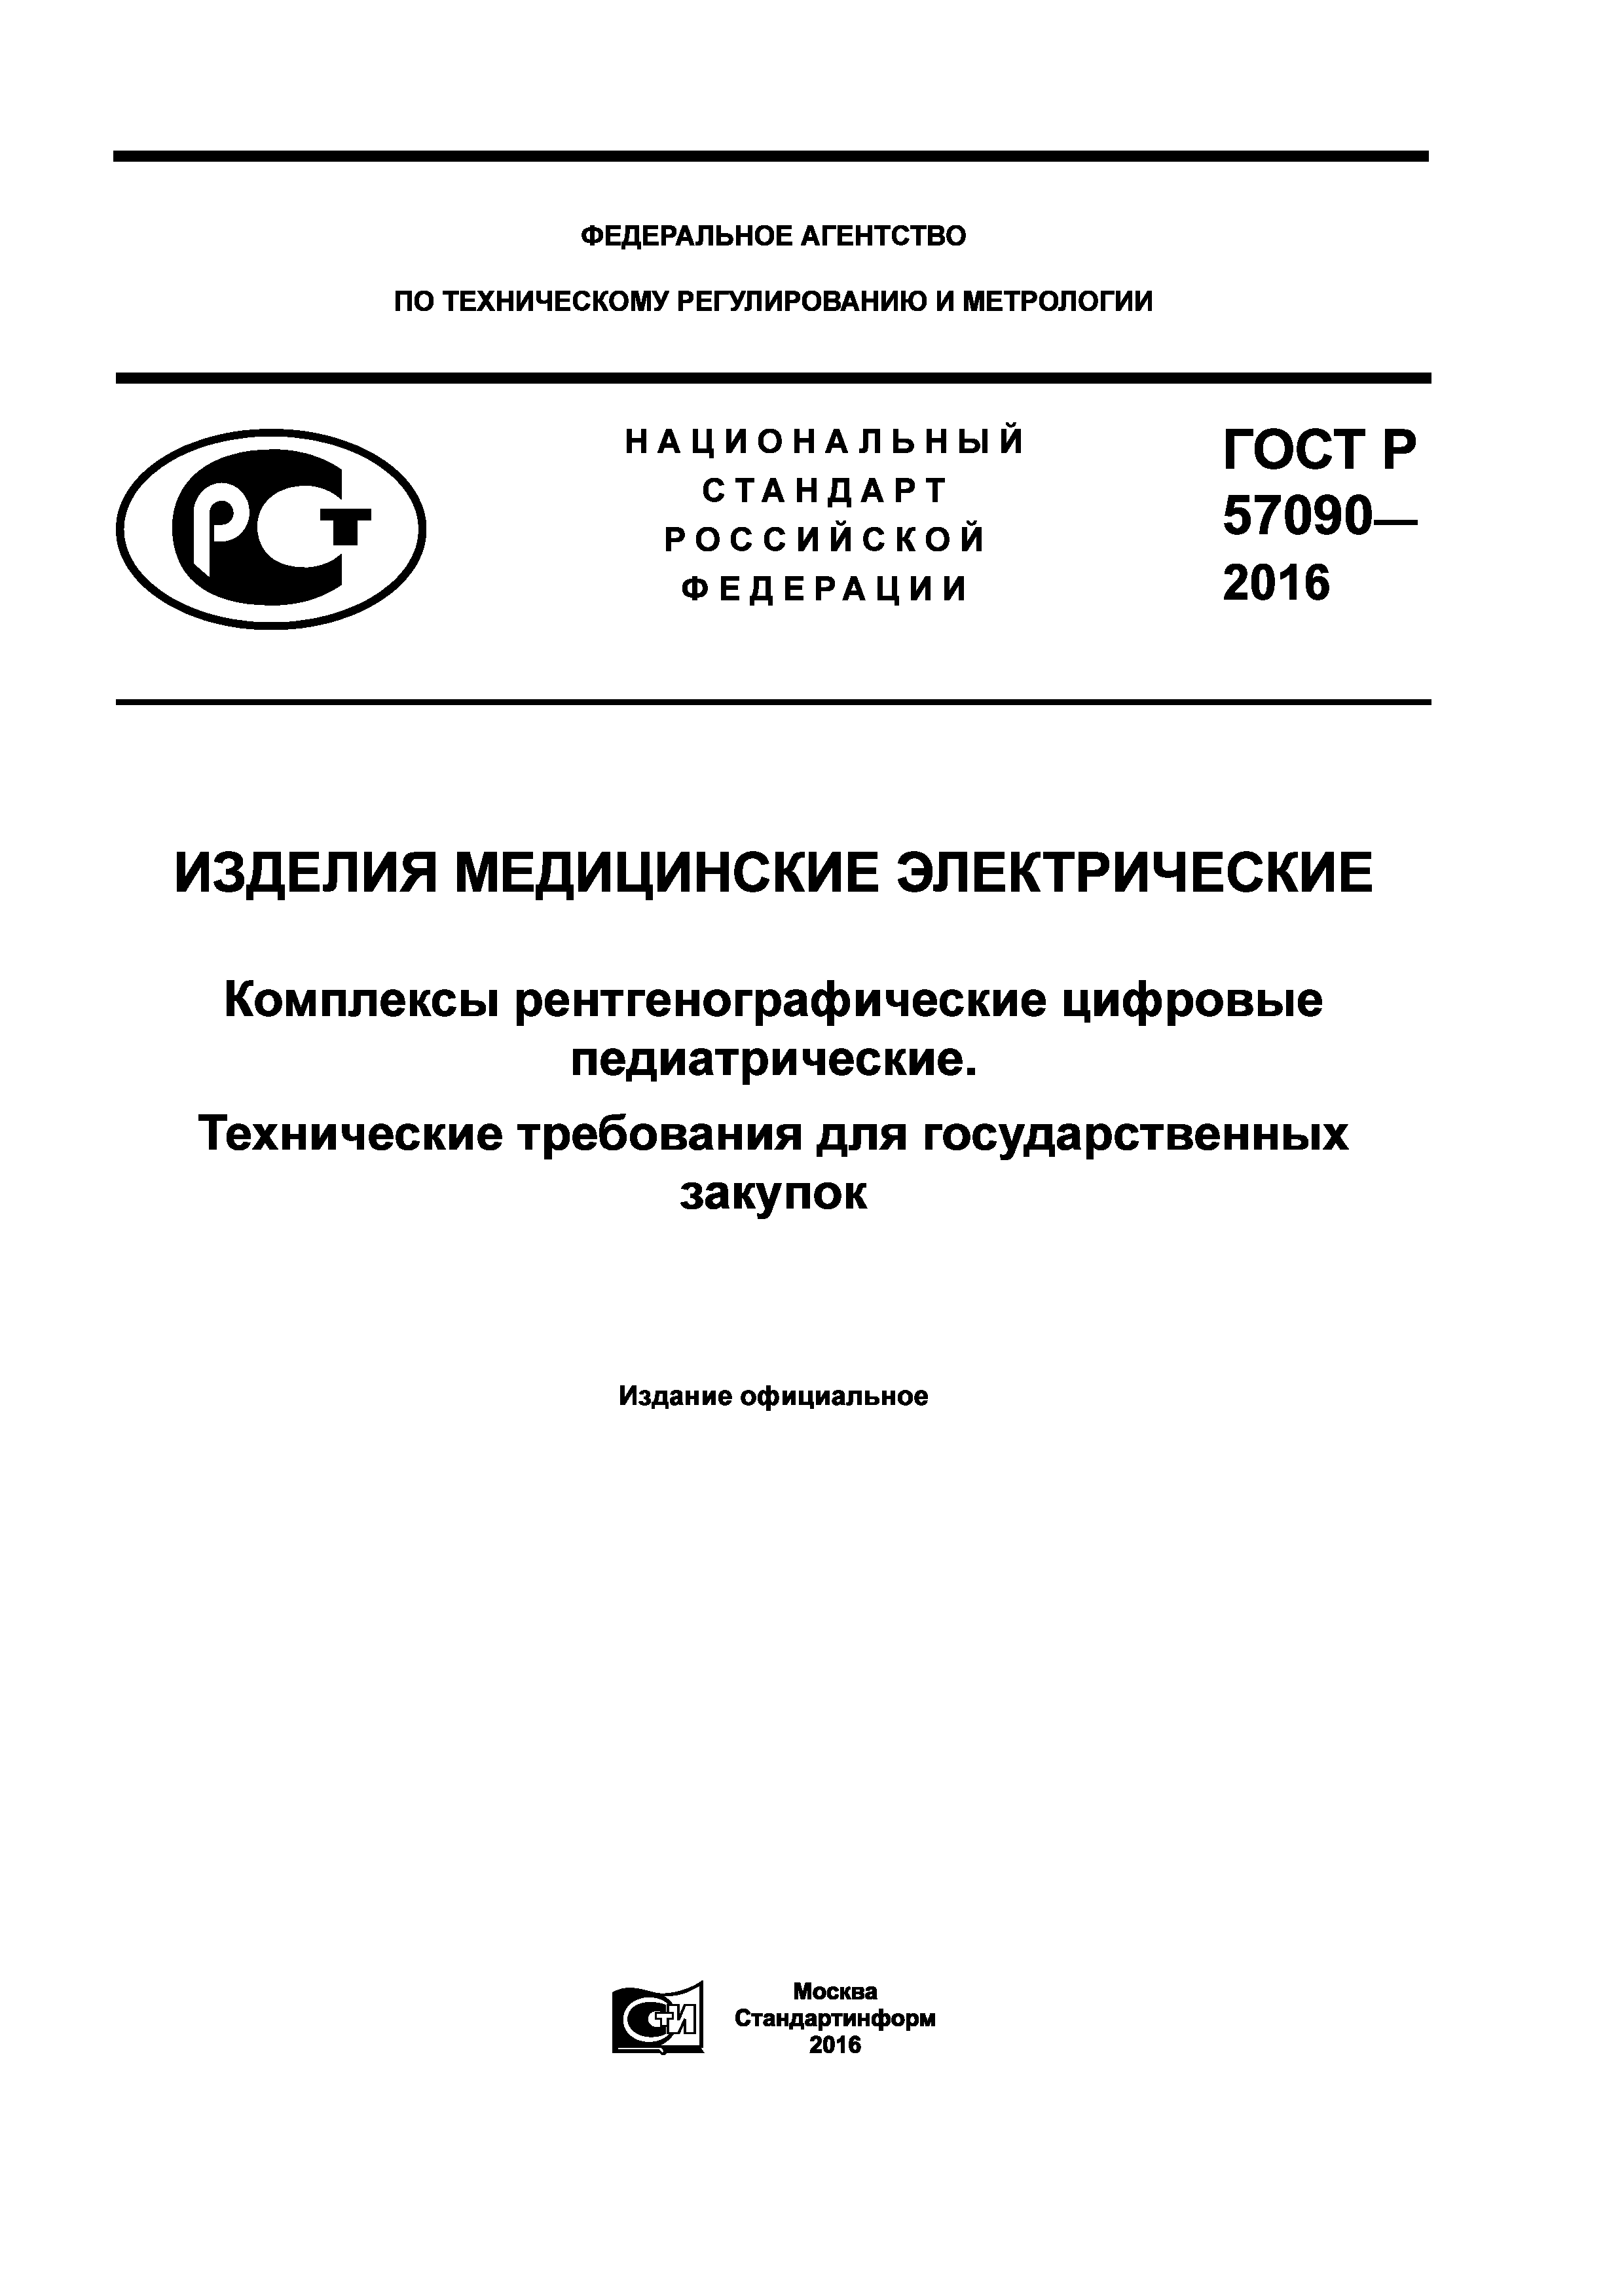 ГОСТ Р 57090-2016